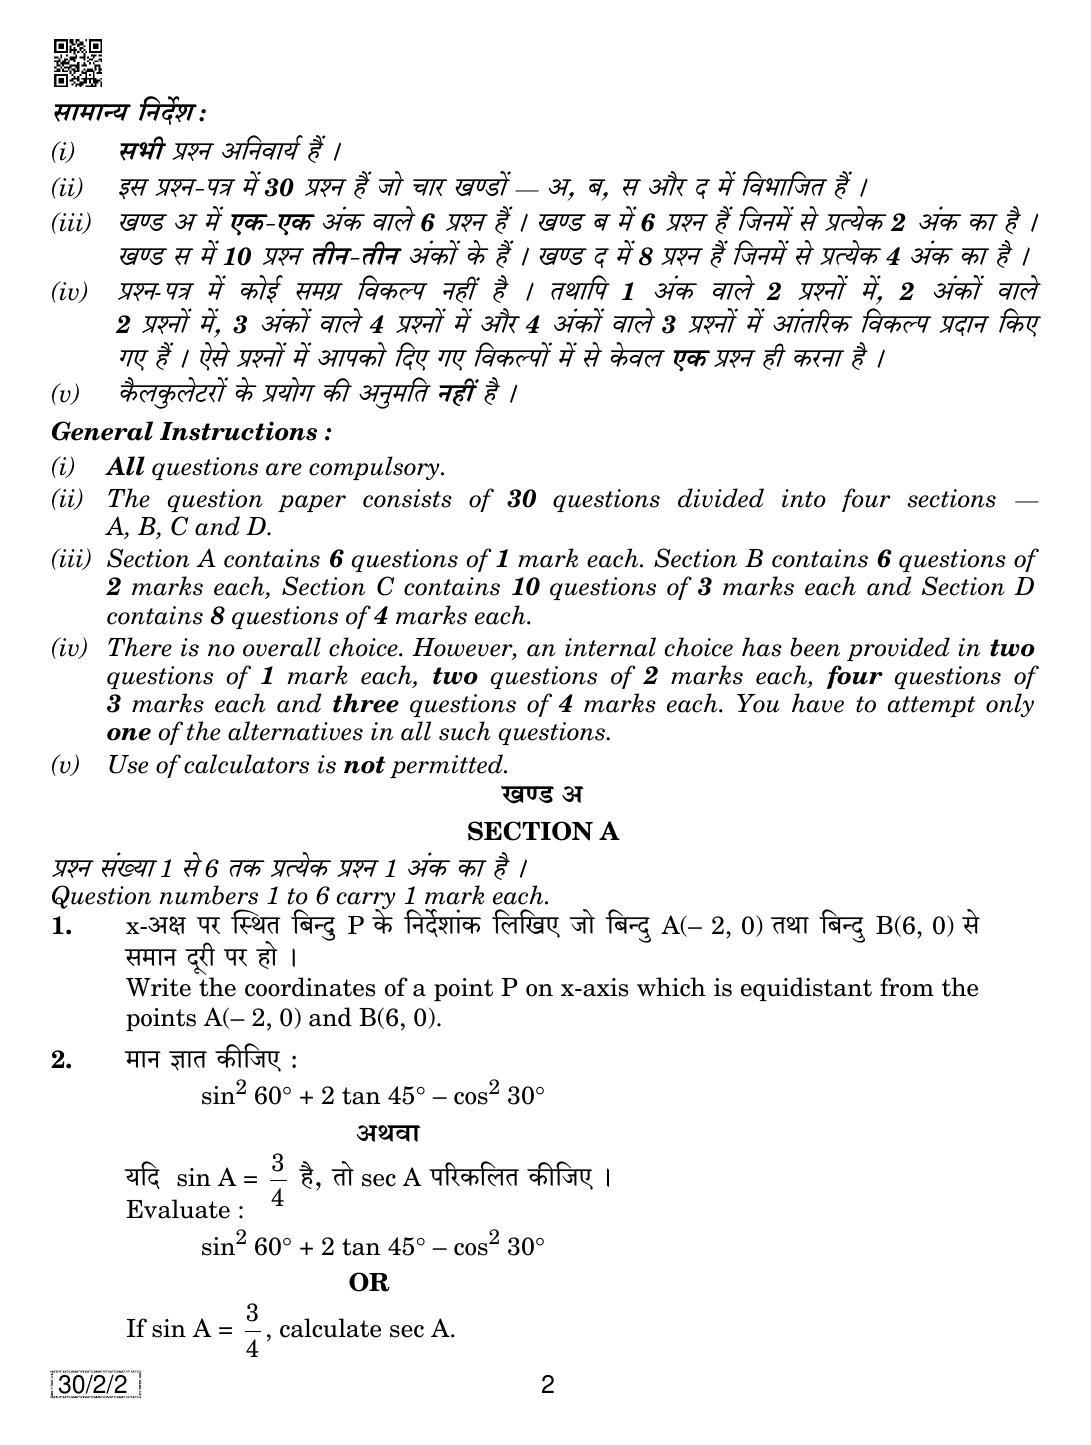 CBSE Class 10 Maths (30/2/2 - SET 2) 2019 Question Paper - Page 2